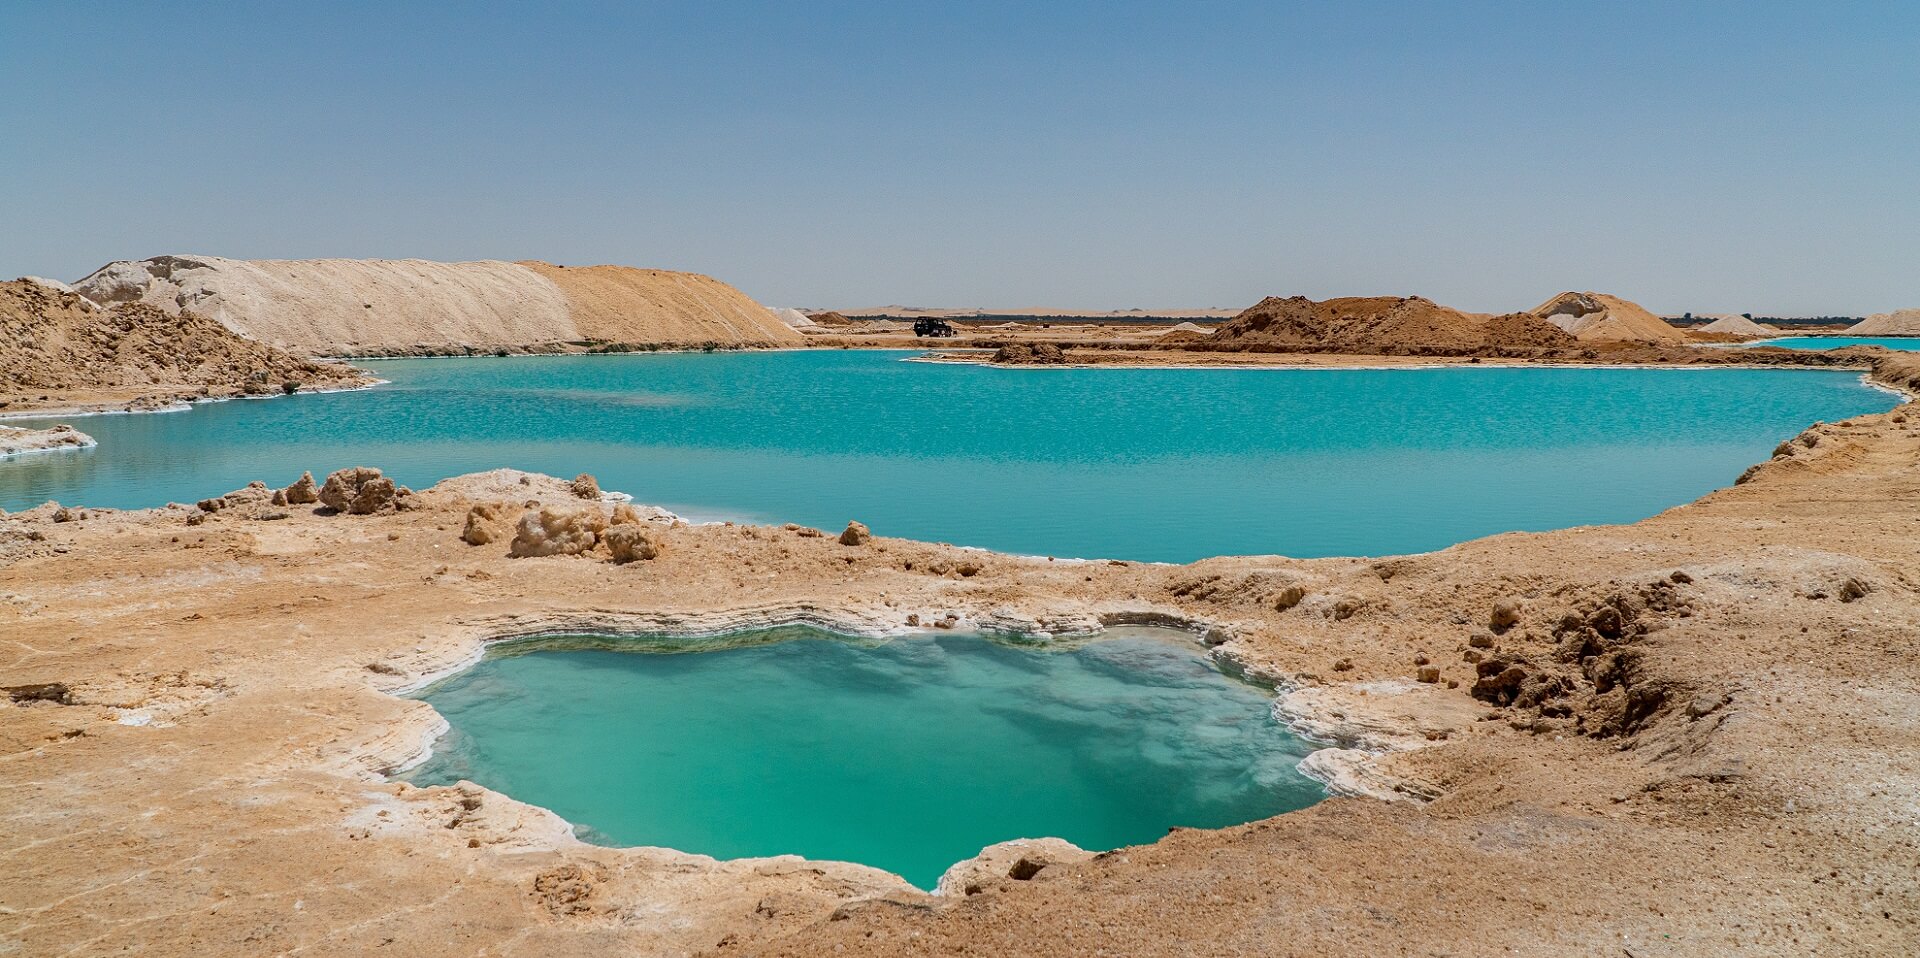 footer salt lakes in Siwa Oasis in Egypt